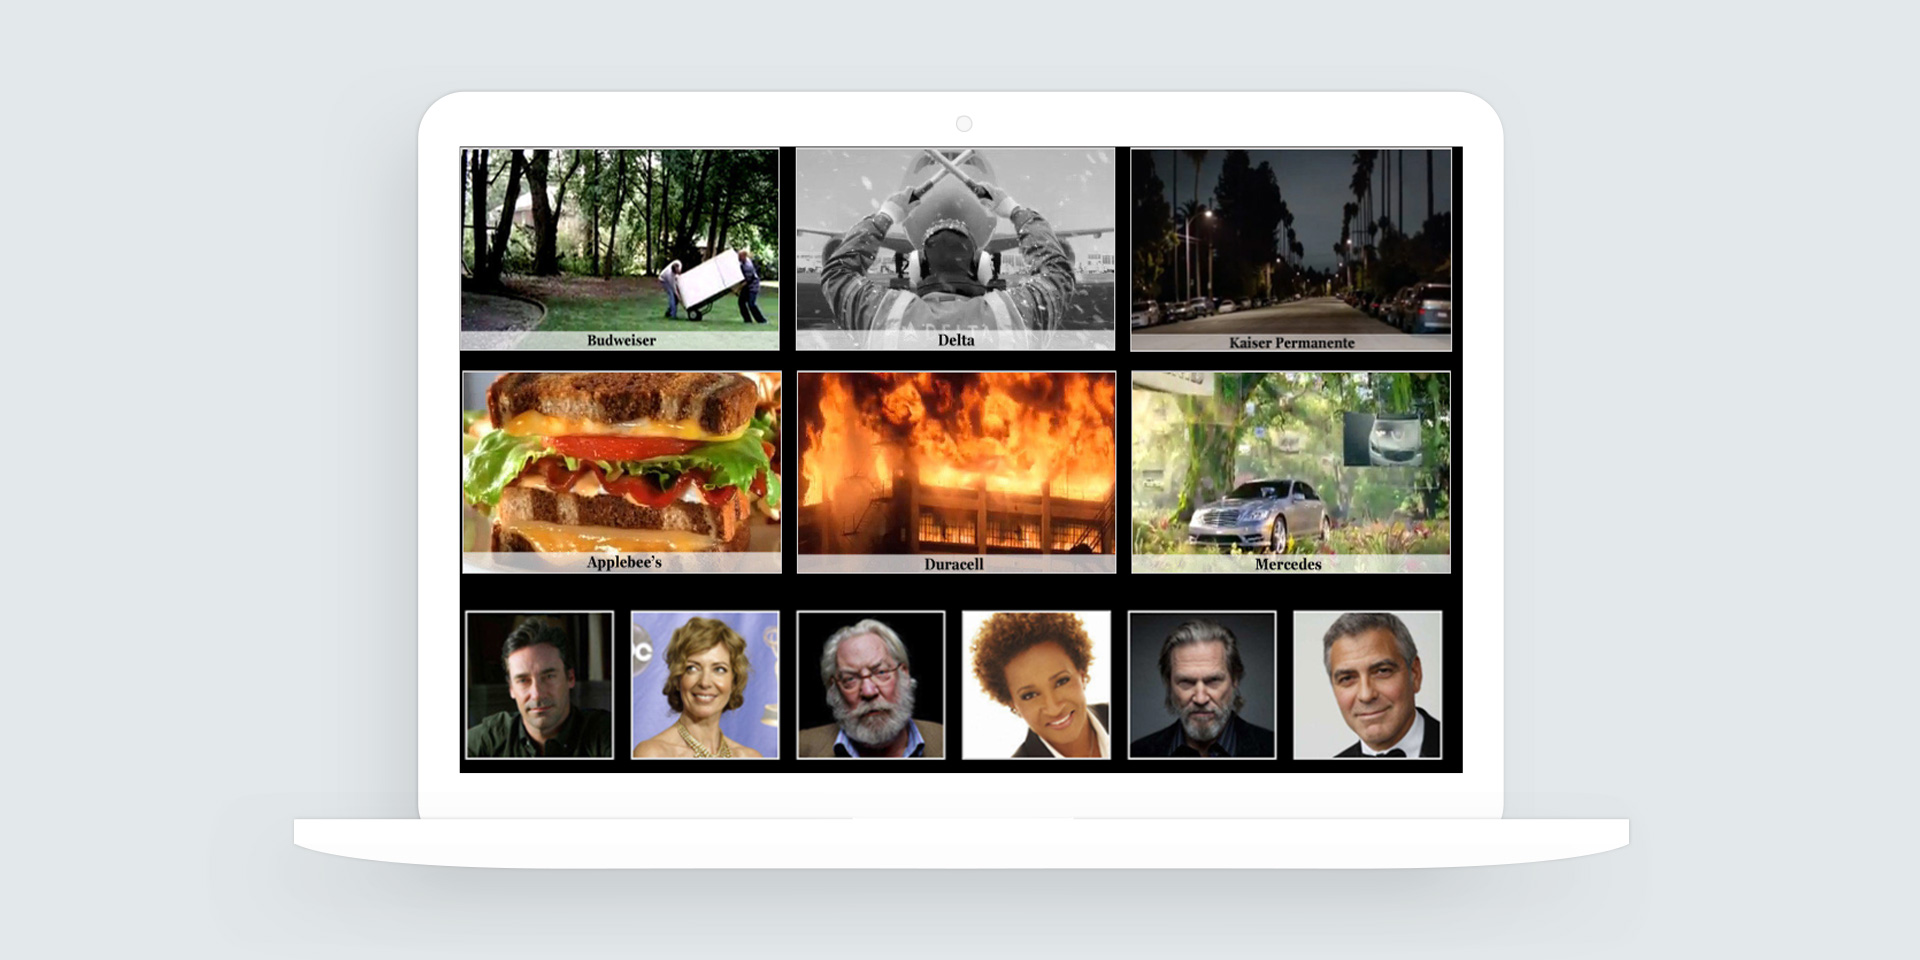 Storyline 360: Interactive Video Gallery